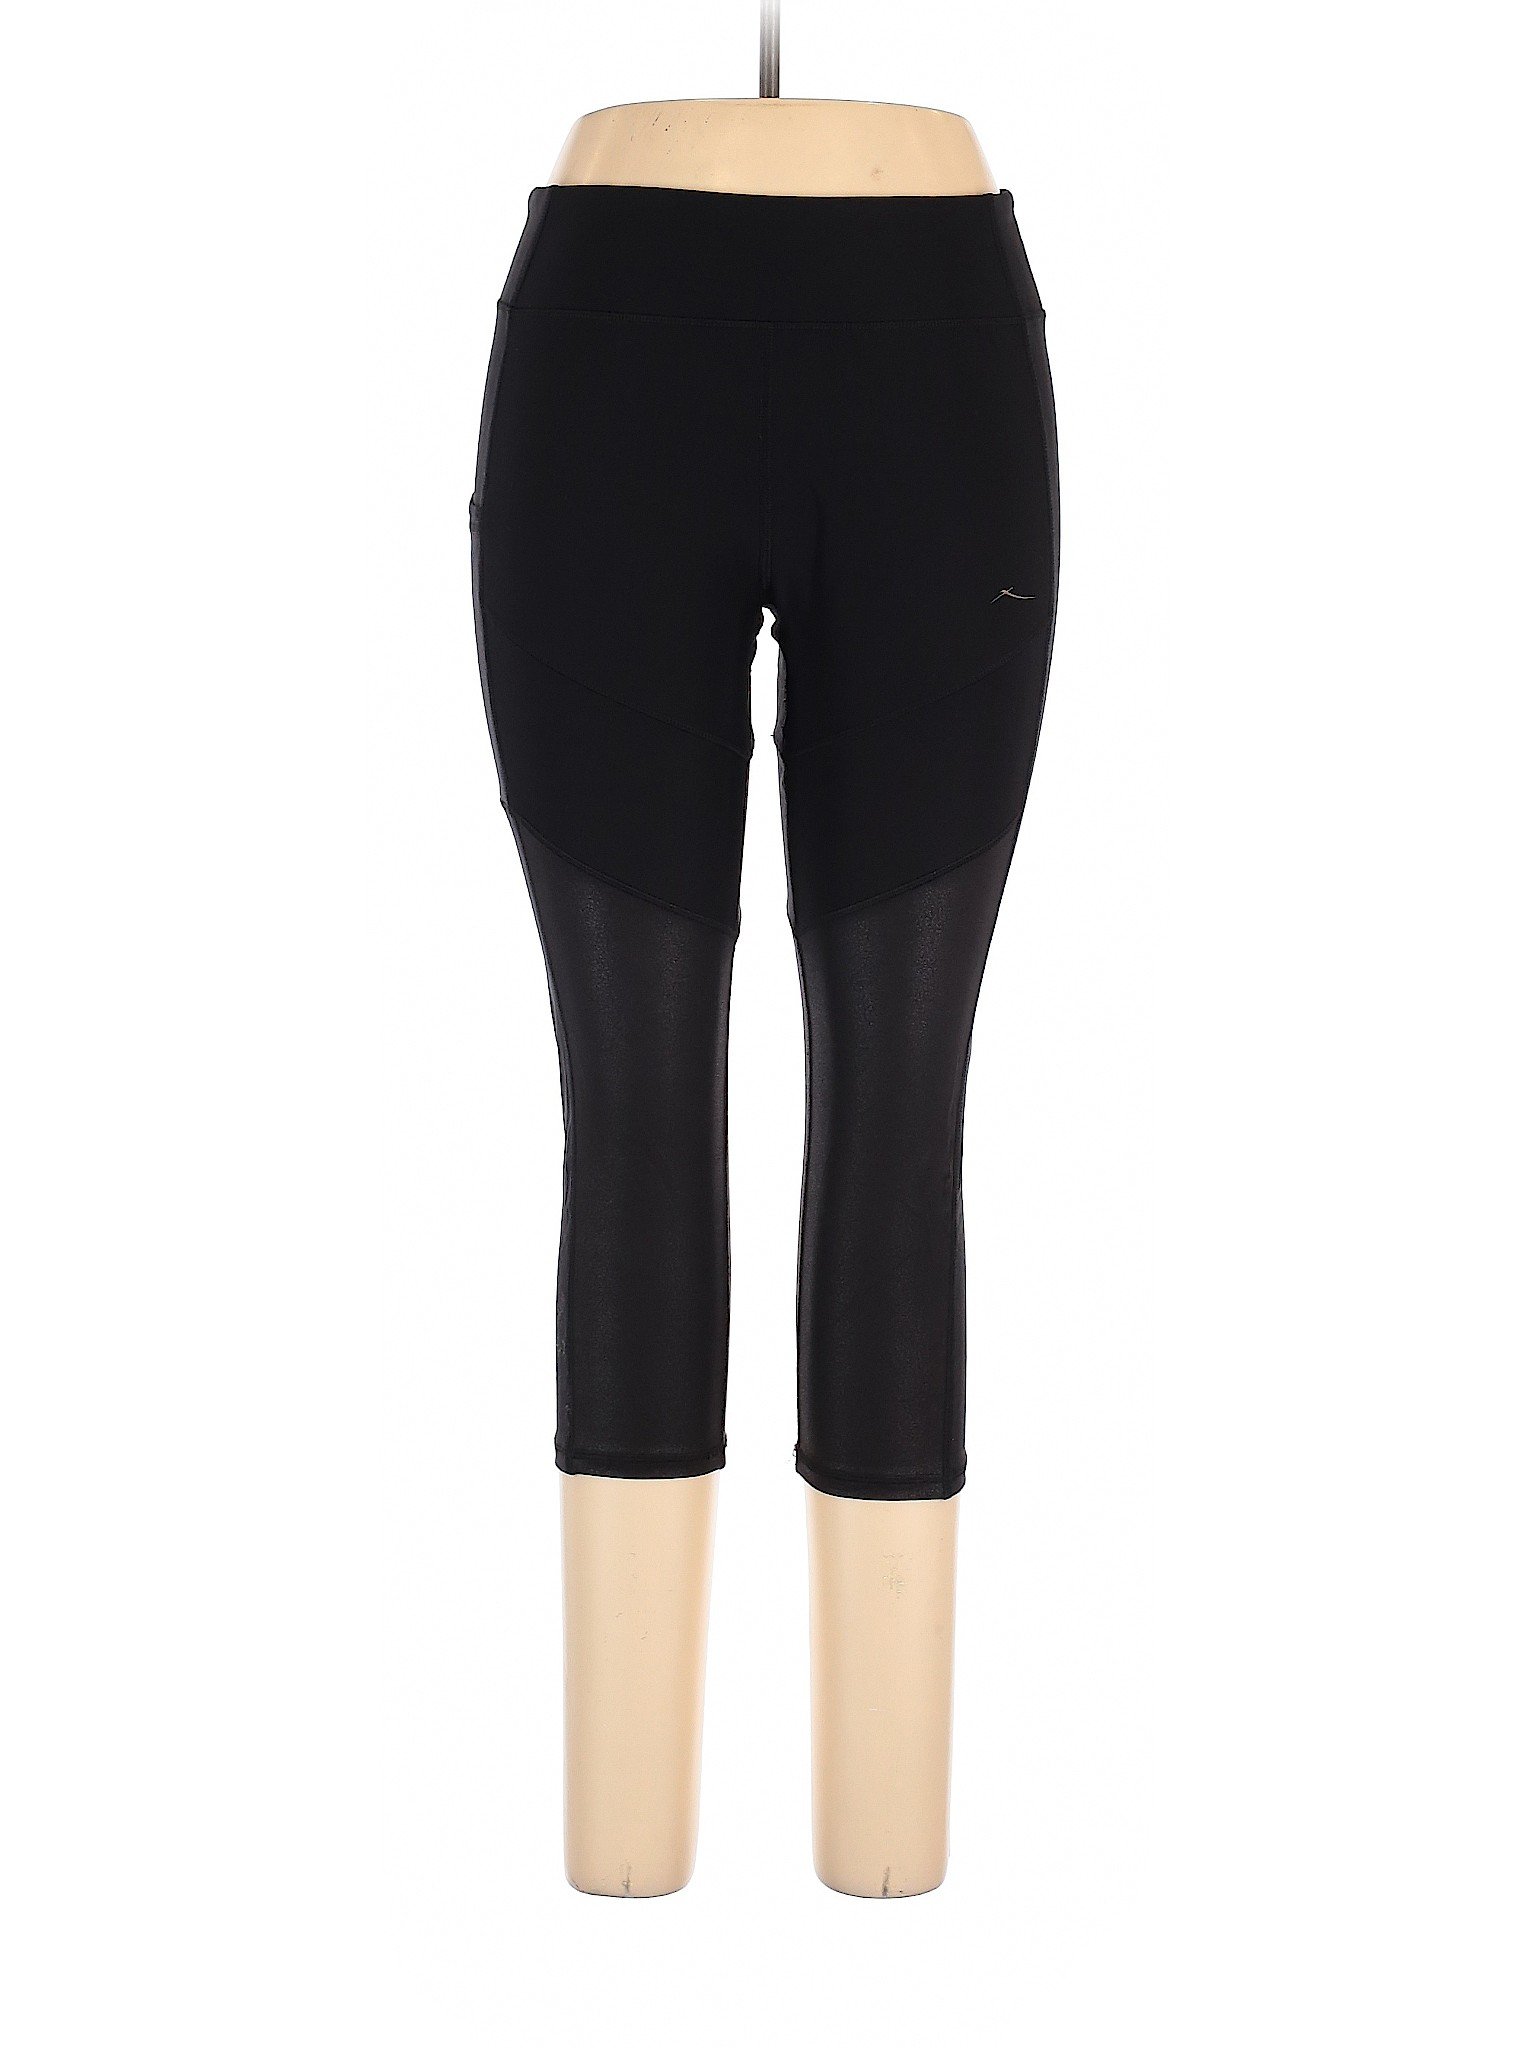 X by Gottex Women Black Active Pants XL | eBay